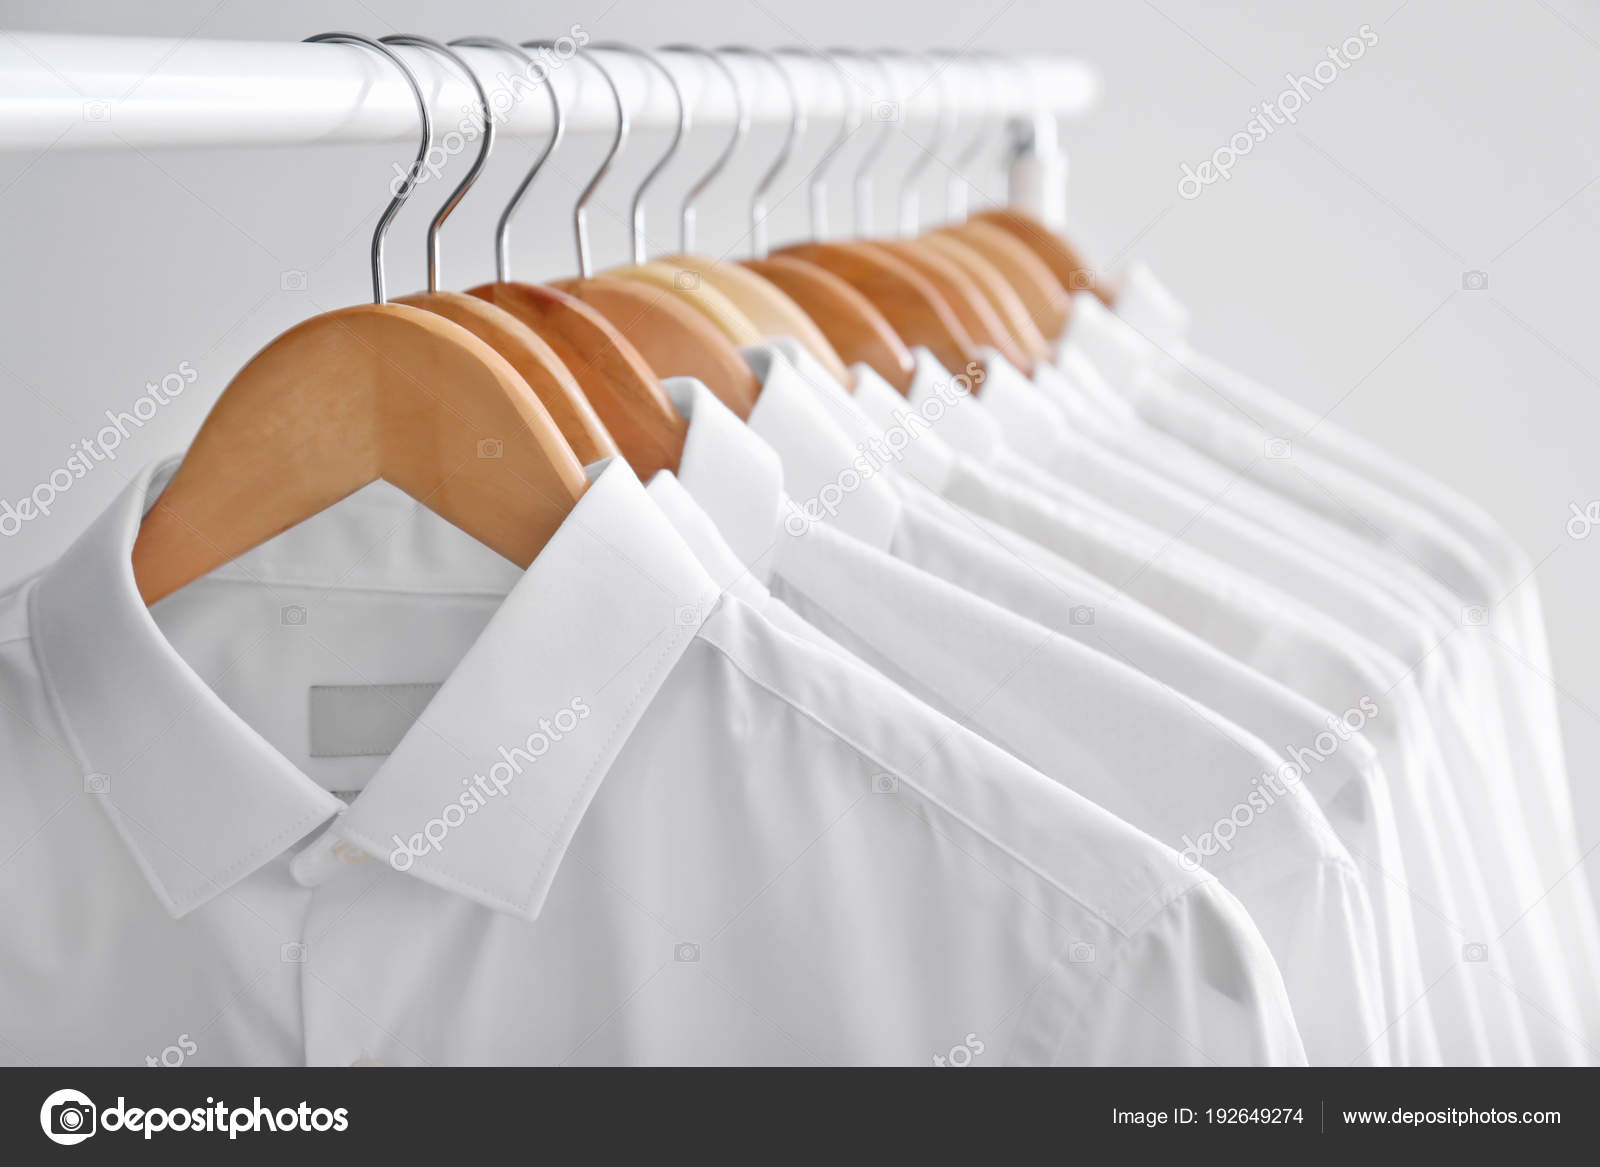 https://st3.depositphotos.com/16122460/19264/i/1600/depositphotos_192649274-stock-photo-rack-with-clean-clothes-on.jpg